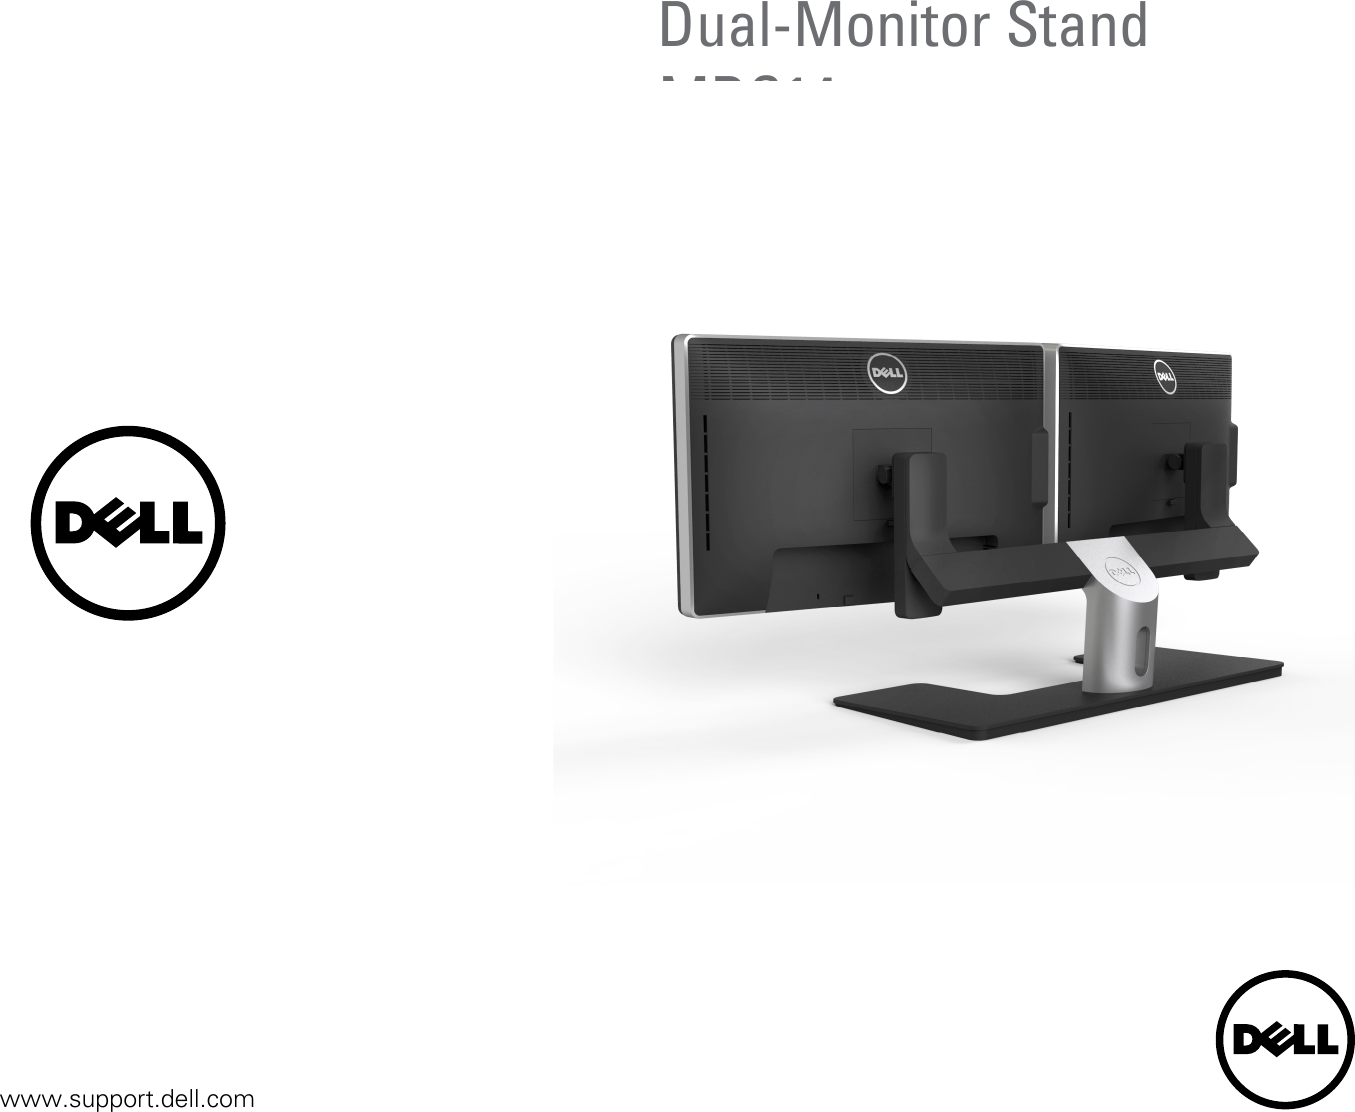 dell inspiron dual monitor setup